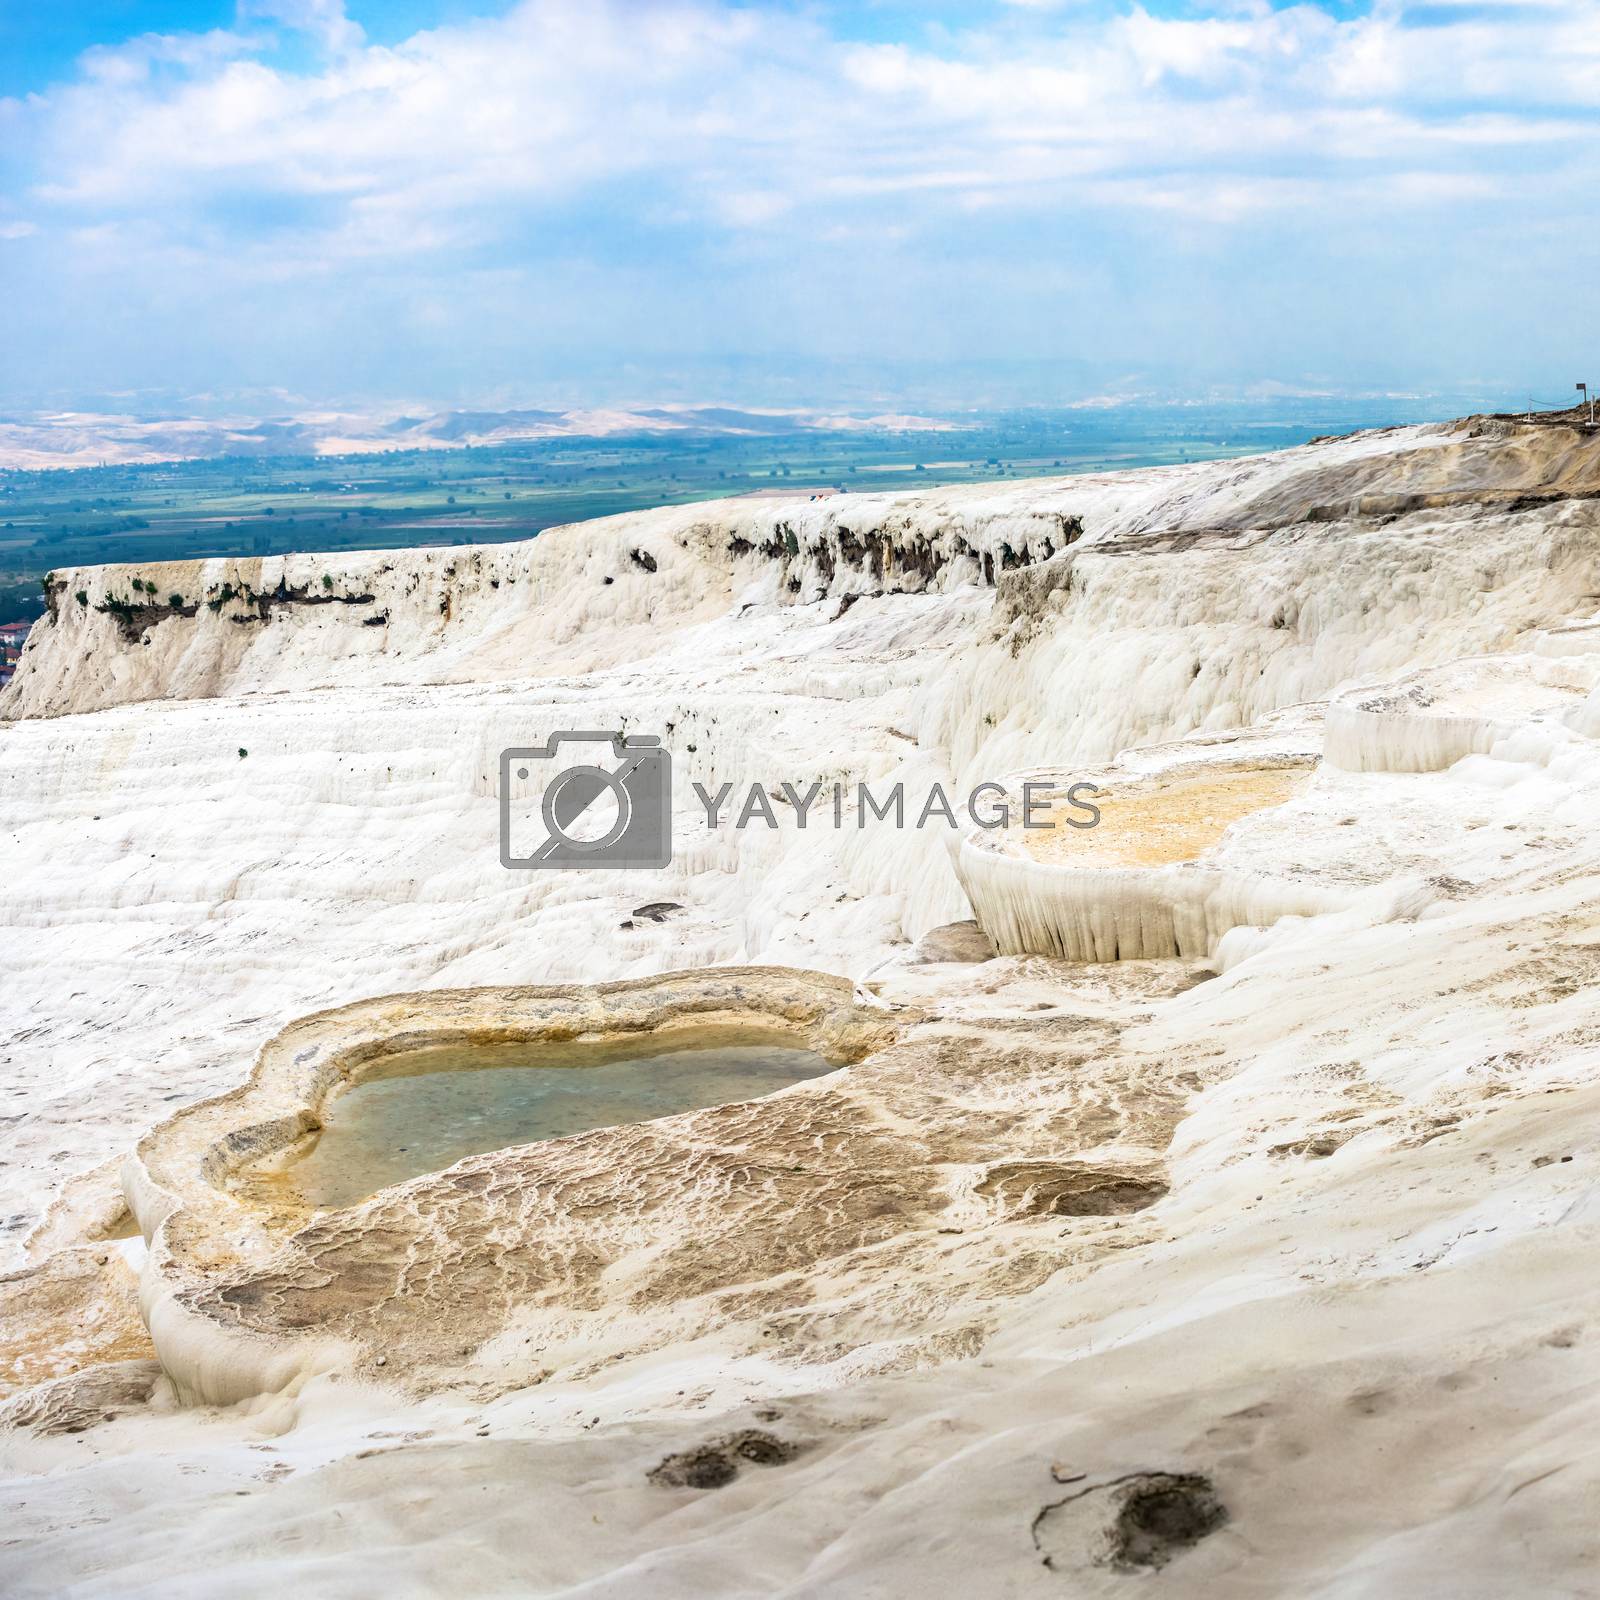 Royalty free image of Pamukkale Travertine pool in Turkey by Multipedia